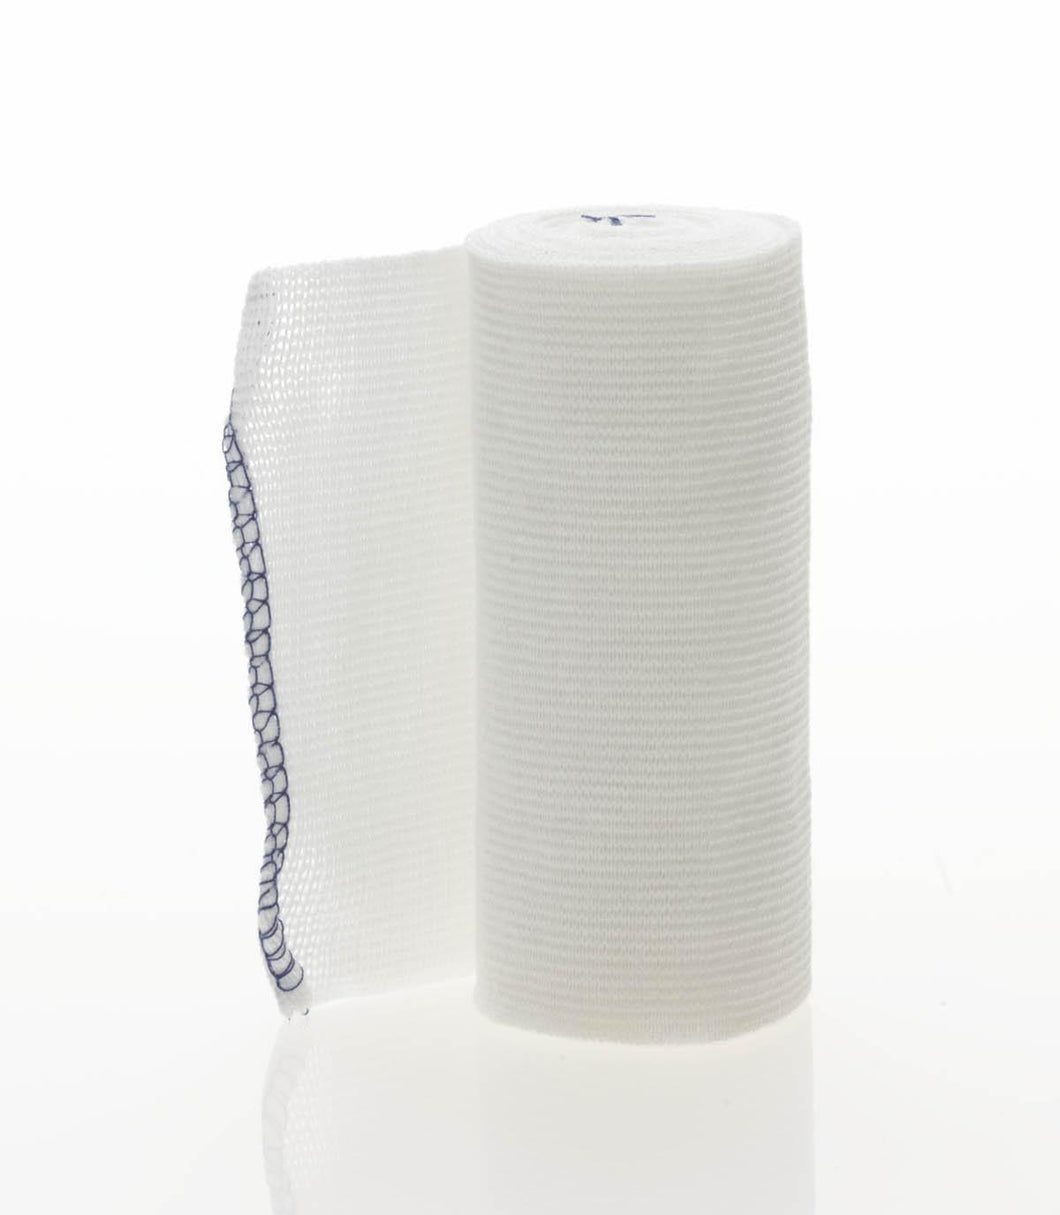 20/CS Medline Swift-Wrap Sterile Elastic Bandages with Self-Closure, 4